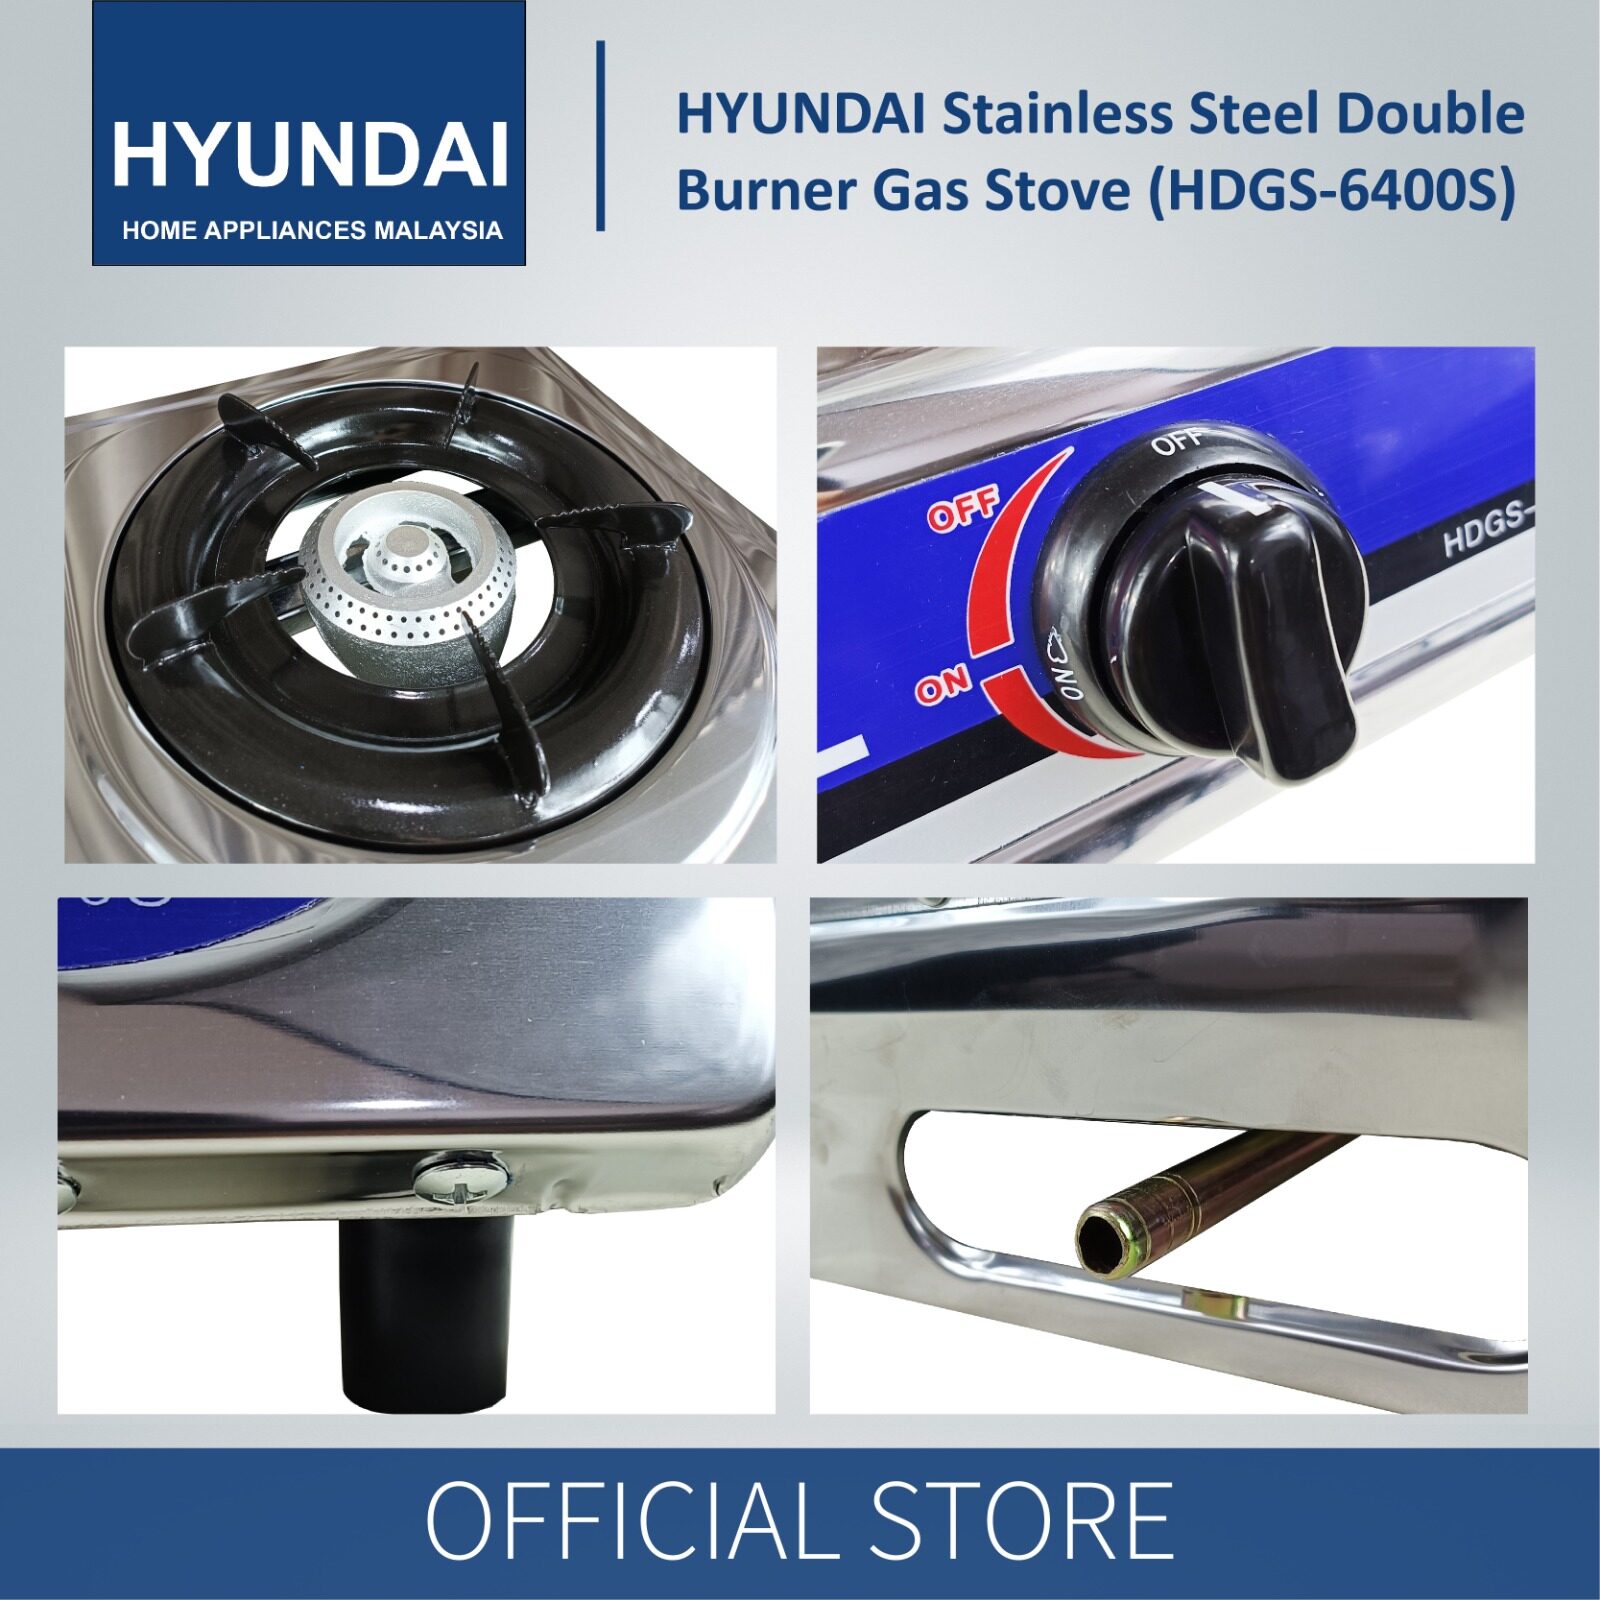 Hyundai HDGS-6400S Stainless Steel Double Burner Gas Stove